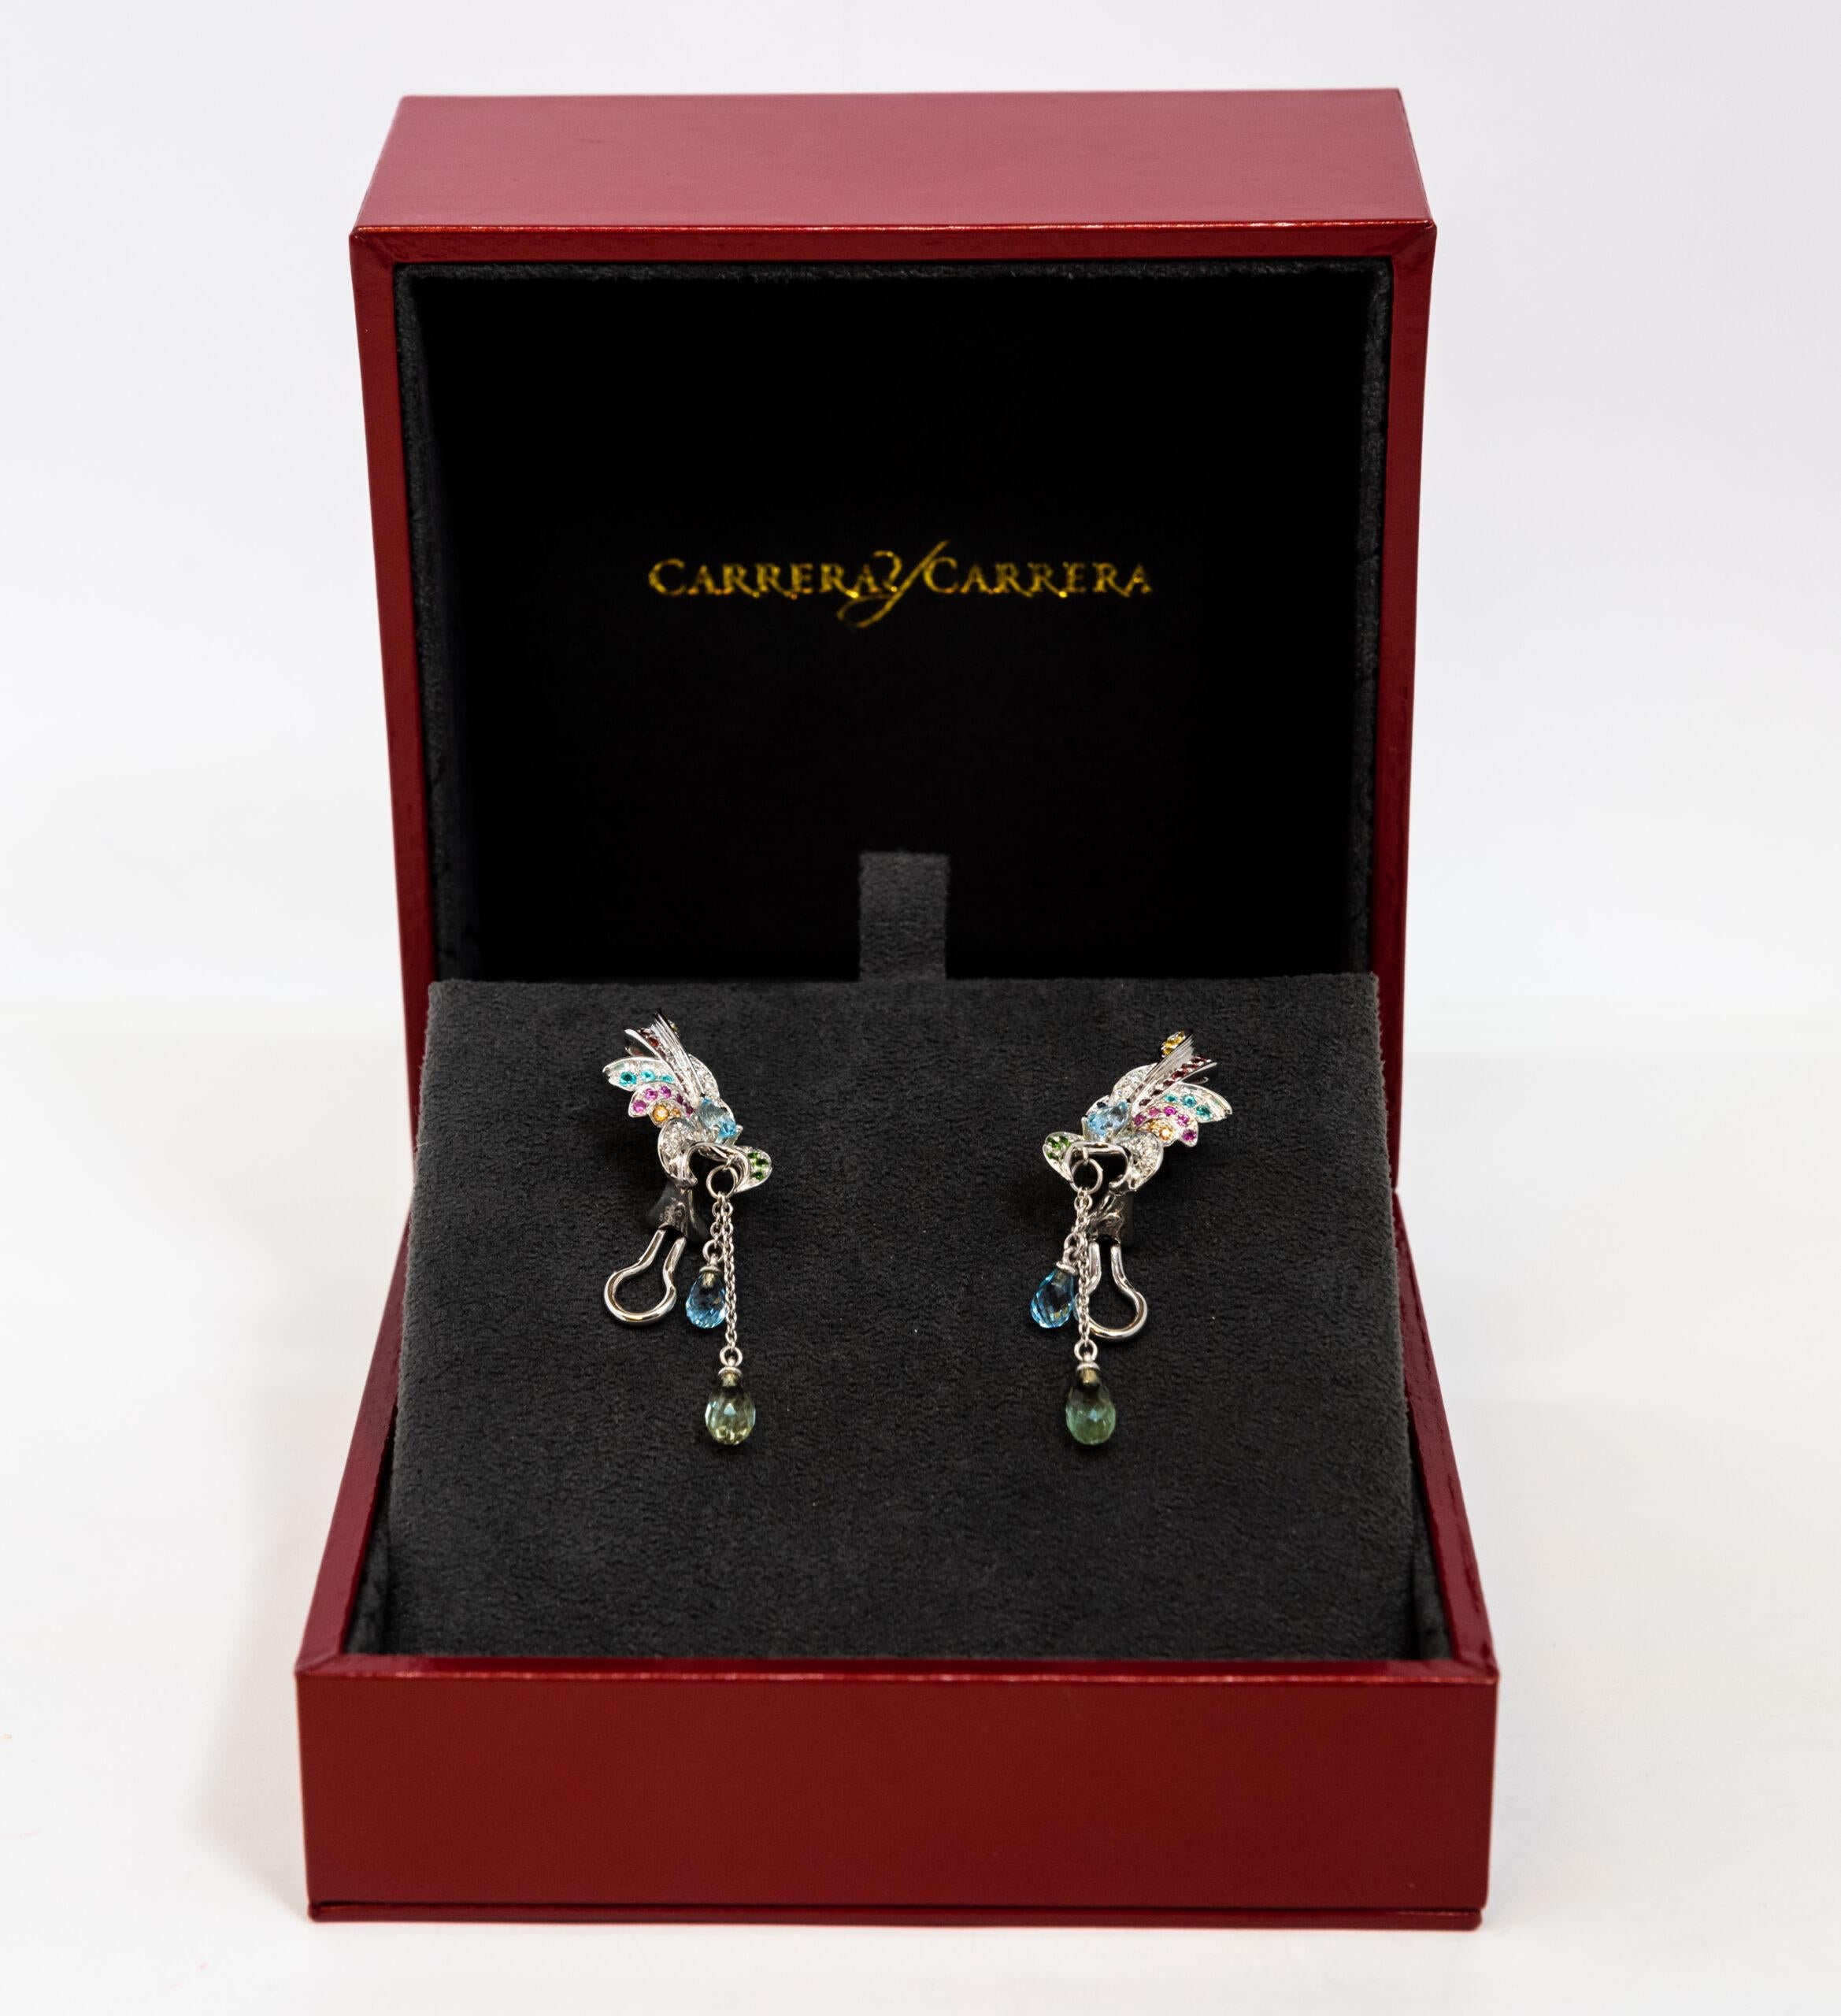 Carrara Y Carrara Hoja Seca 18k White Gold & Sapphires Earring, 10070459 In New Condition For Sale In North Miami Beach, FL